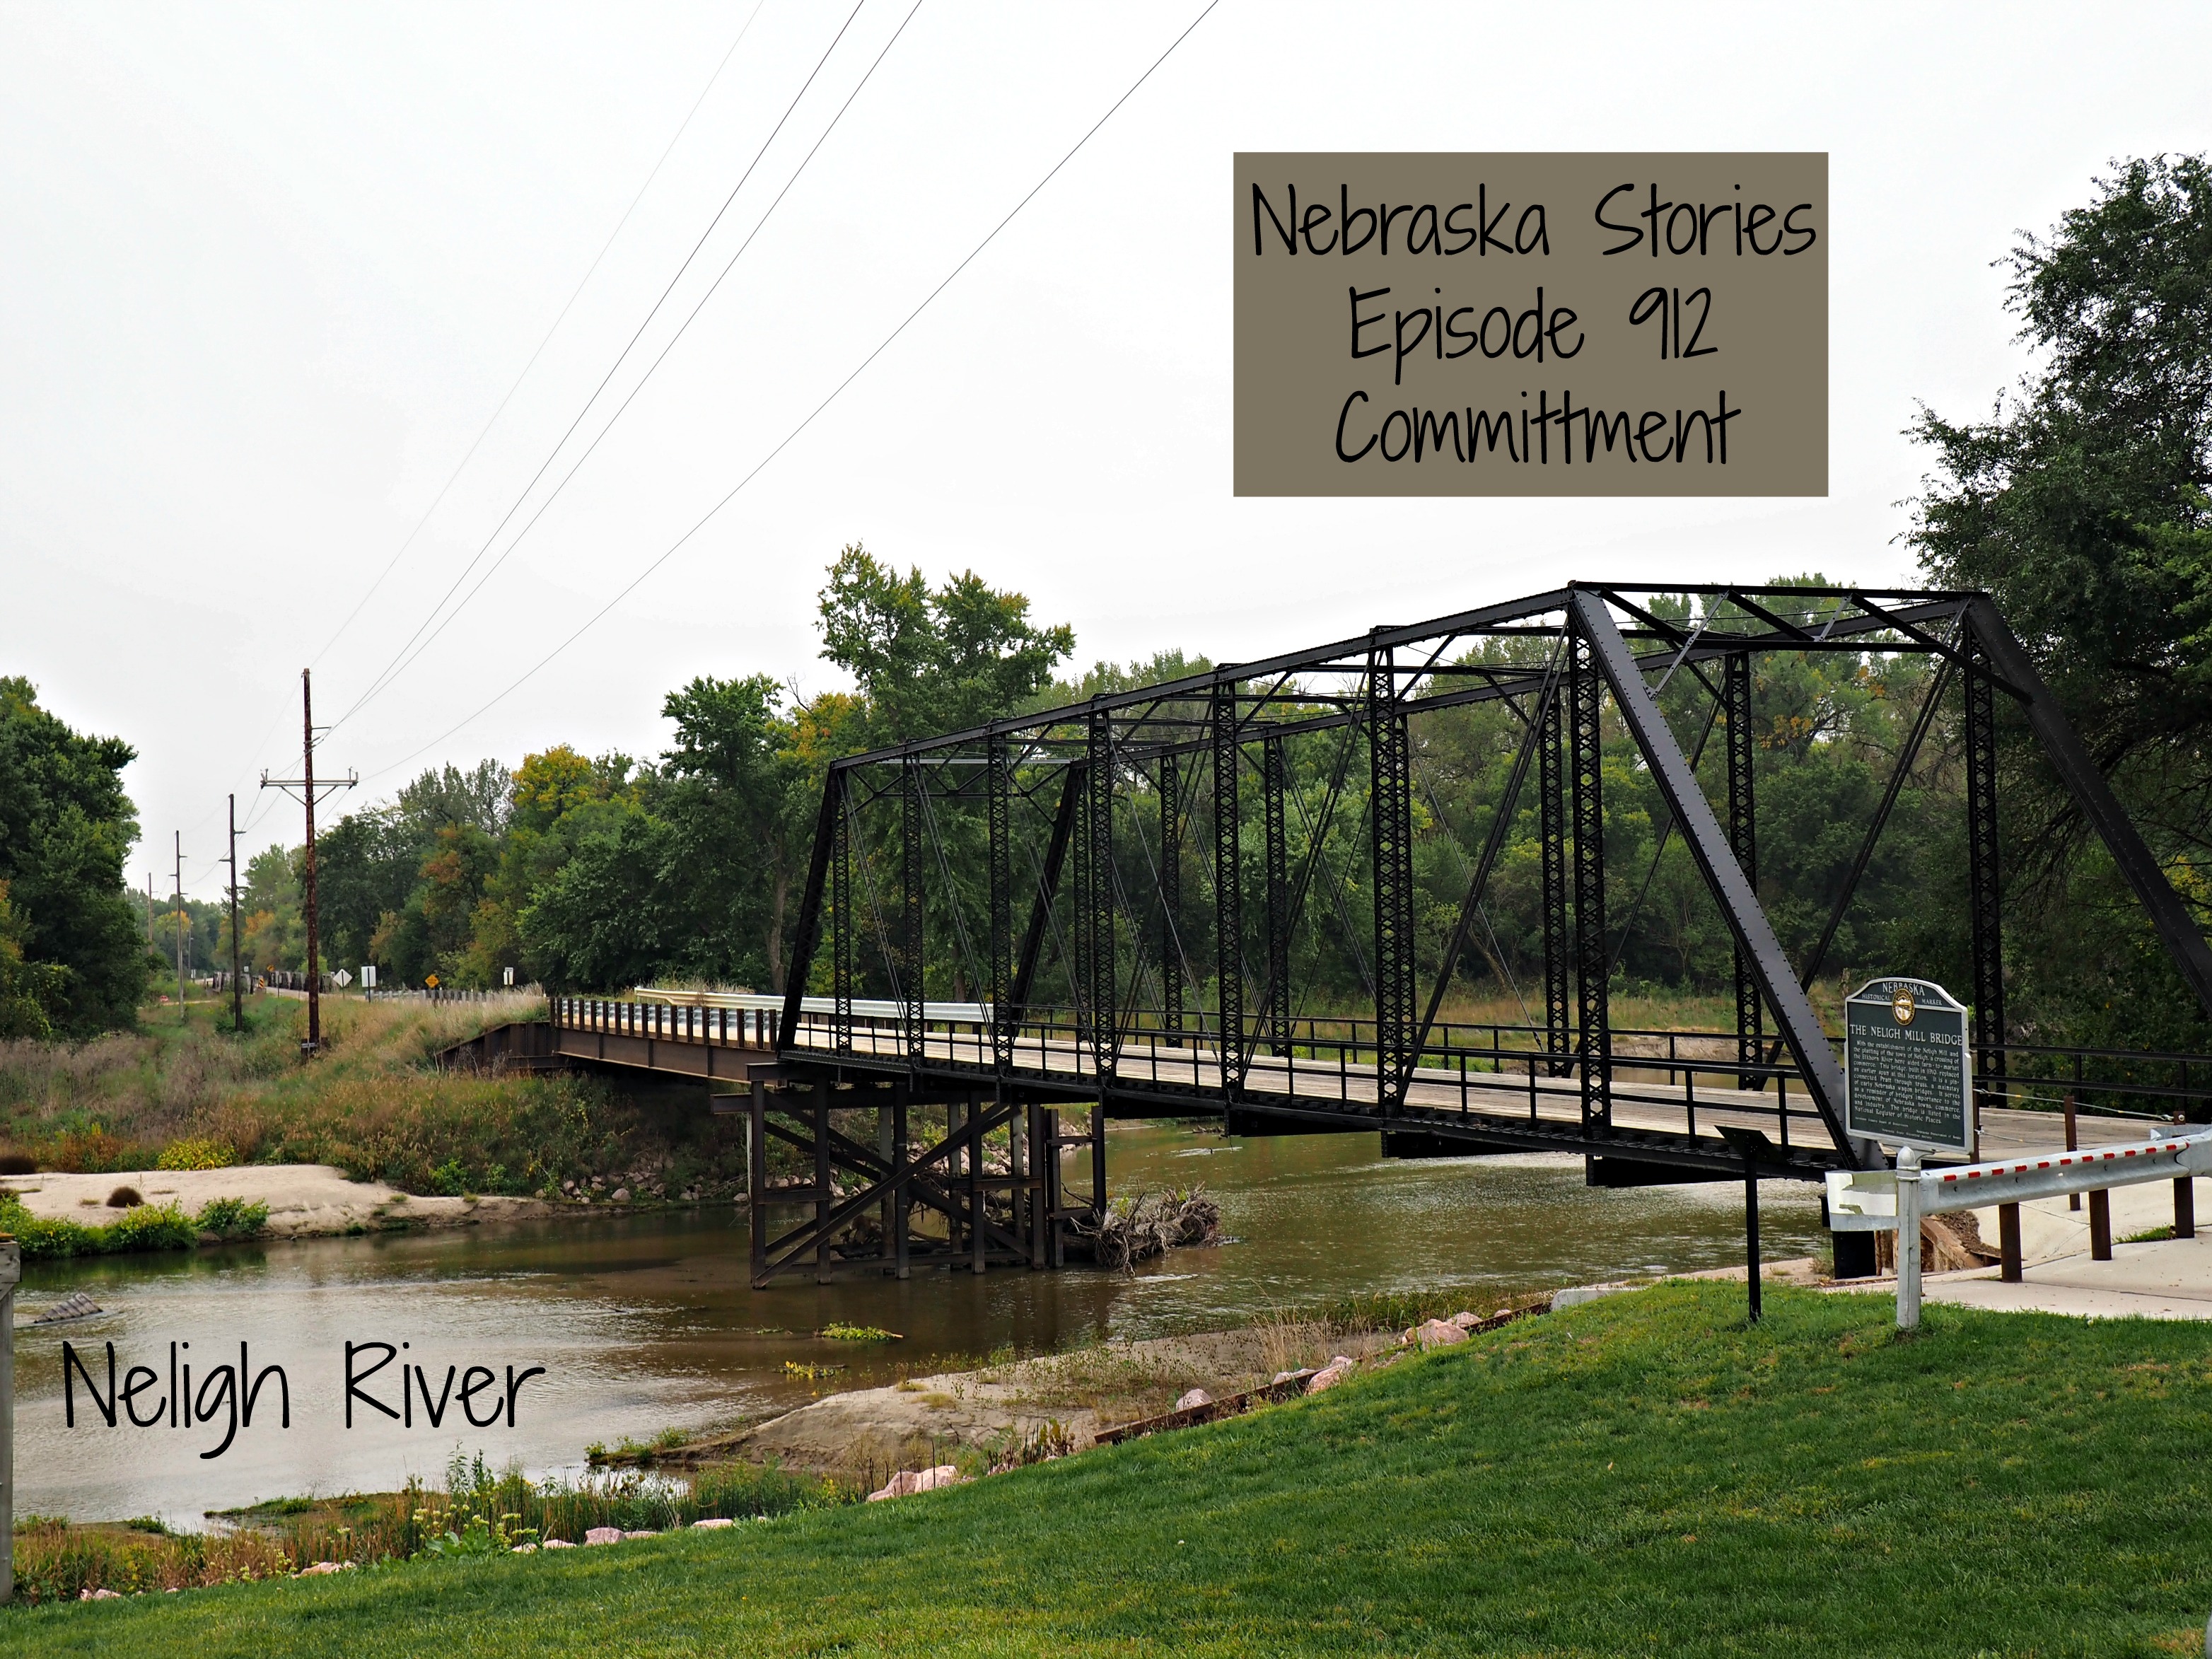 Nebraska Stories Episode 912 Commitment